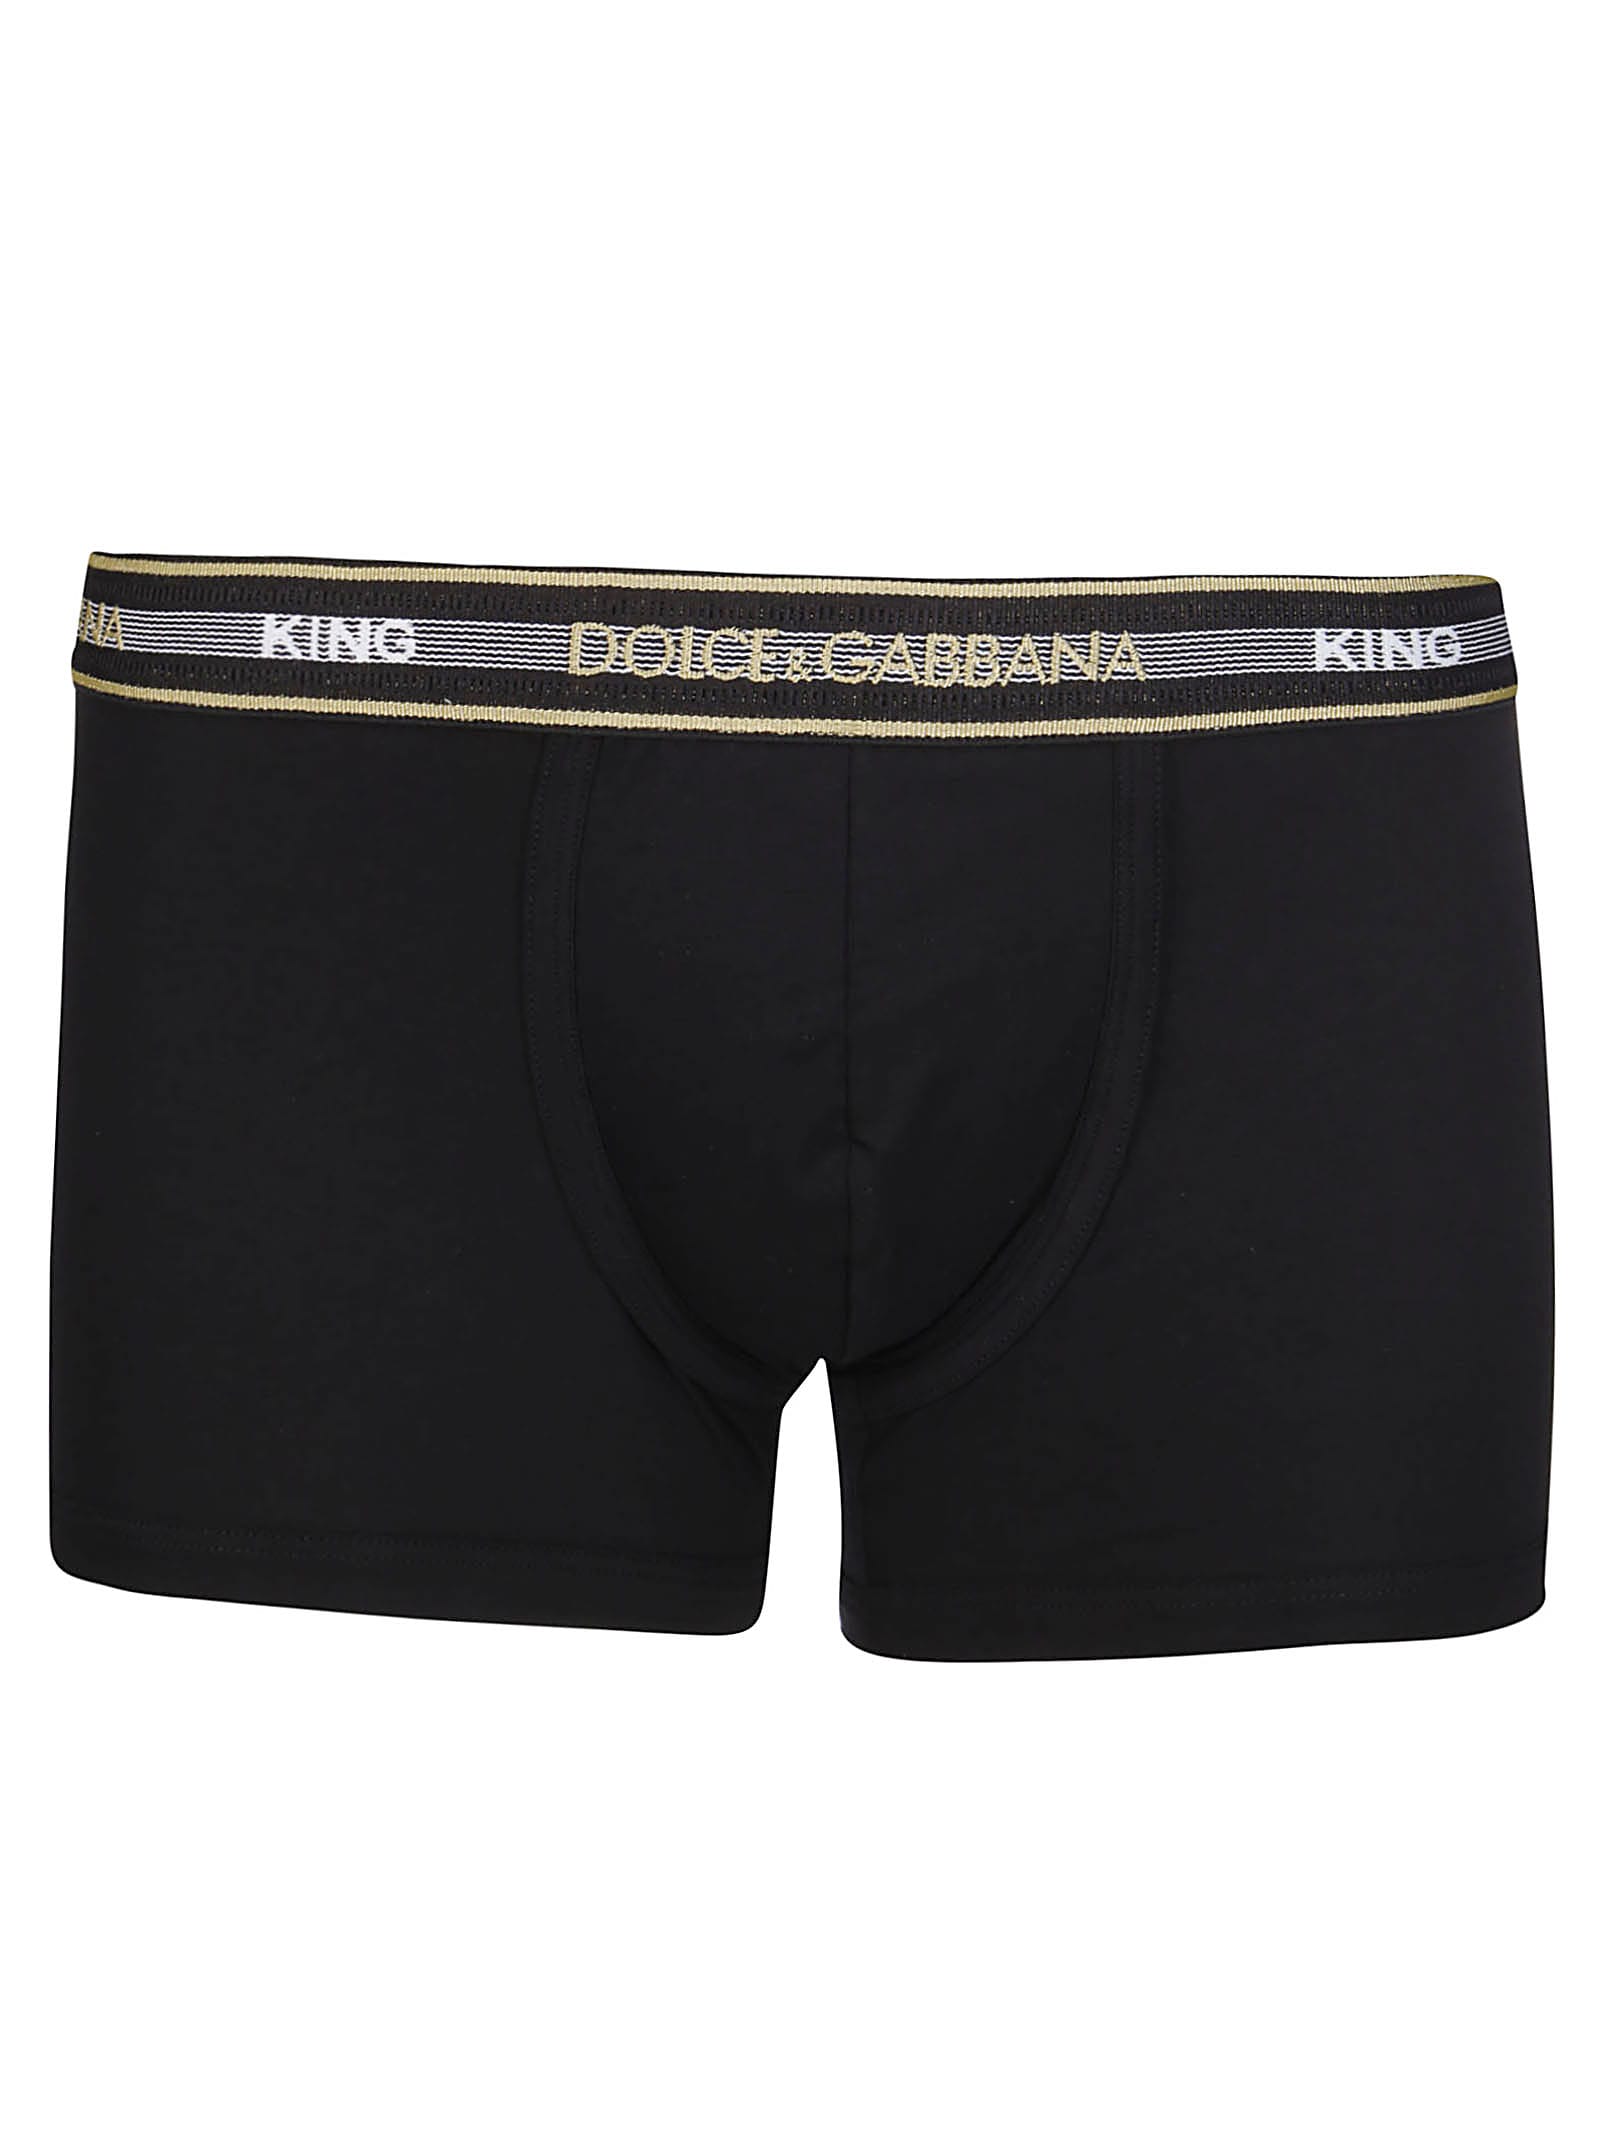 Dolce & Gabbana Black Stretch Cotton Boxers